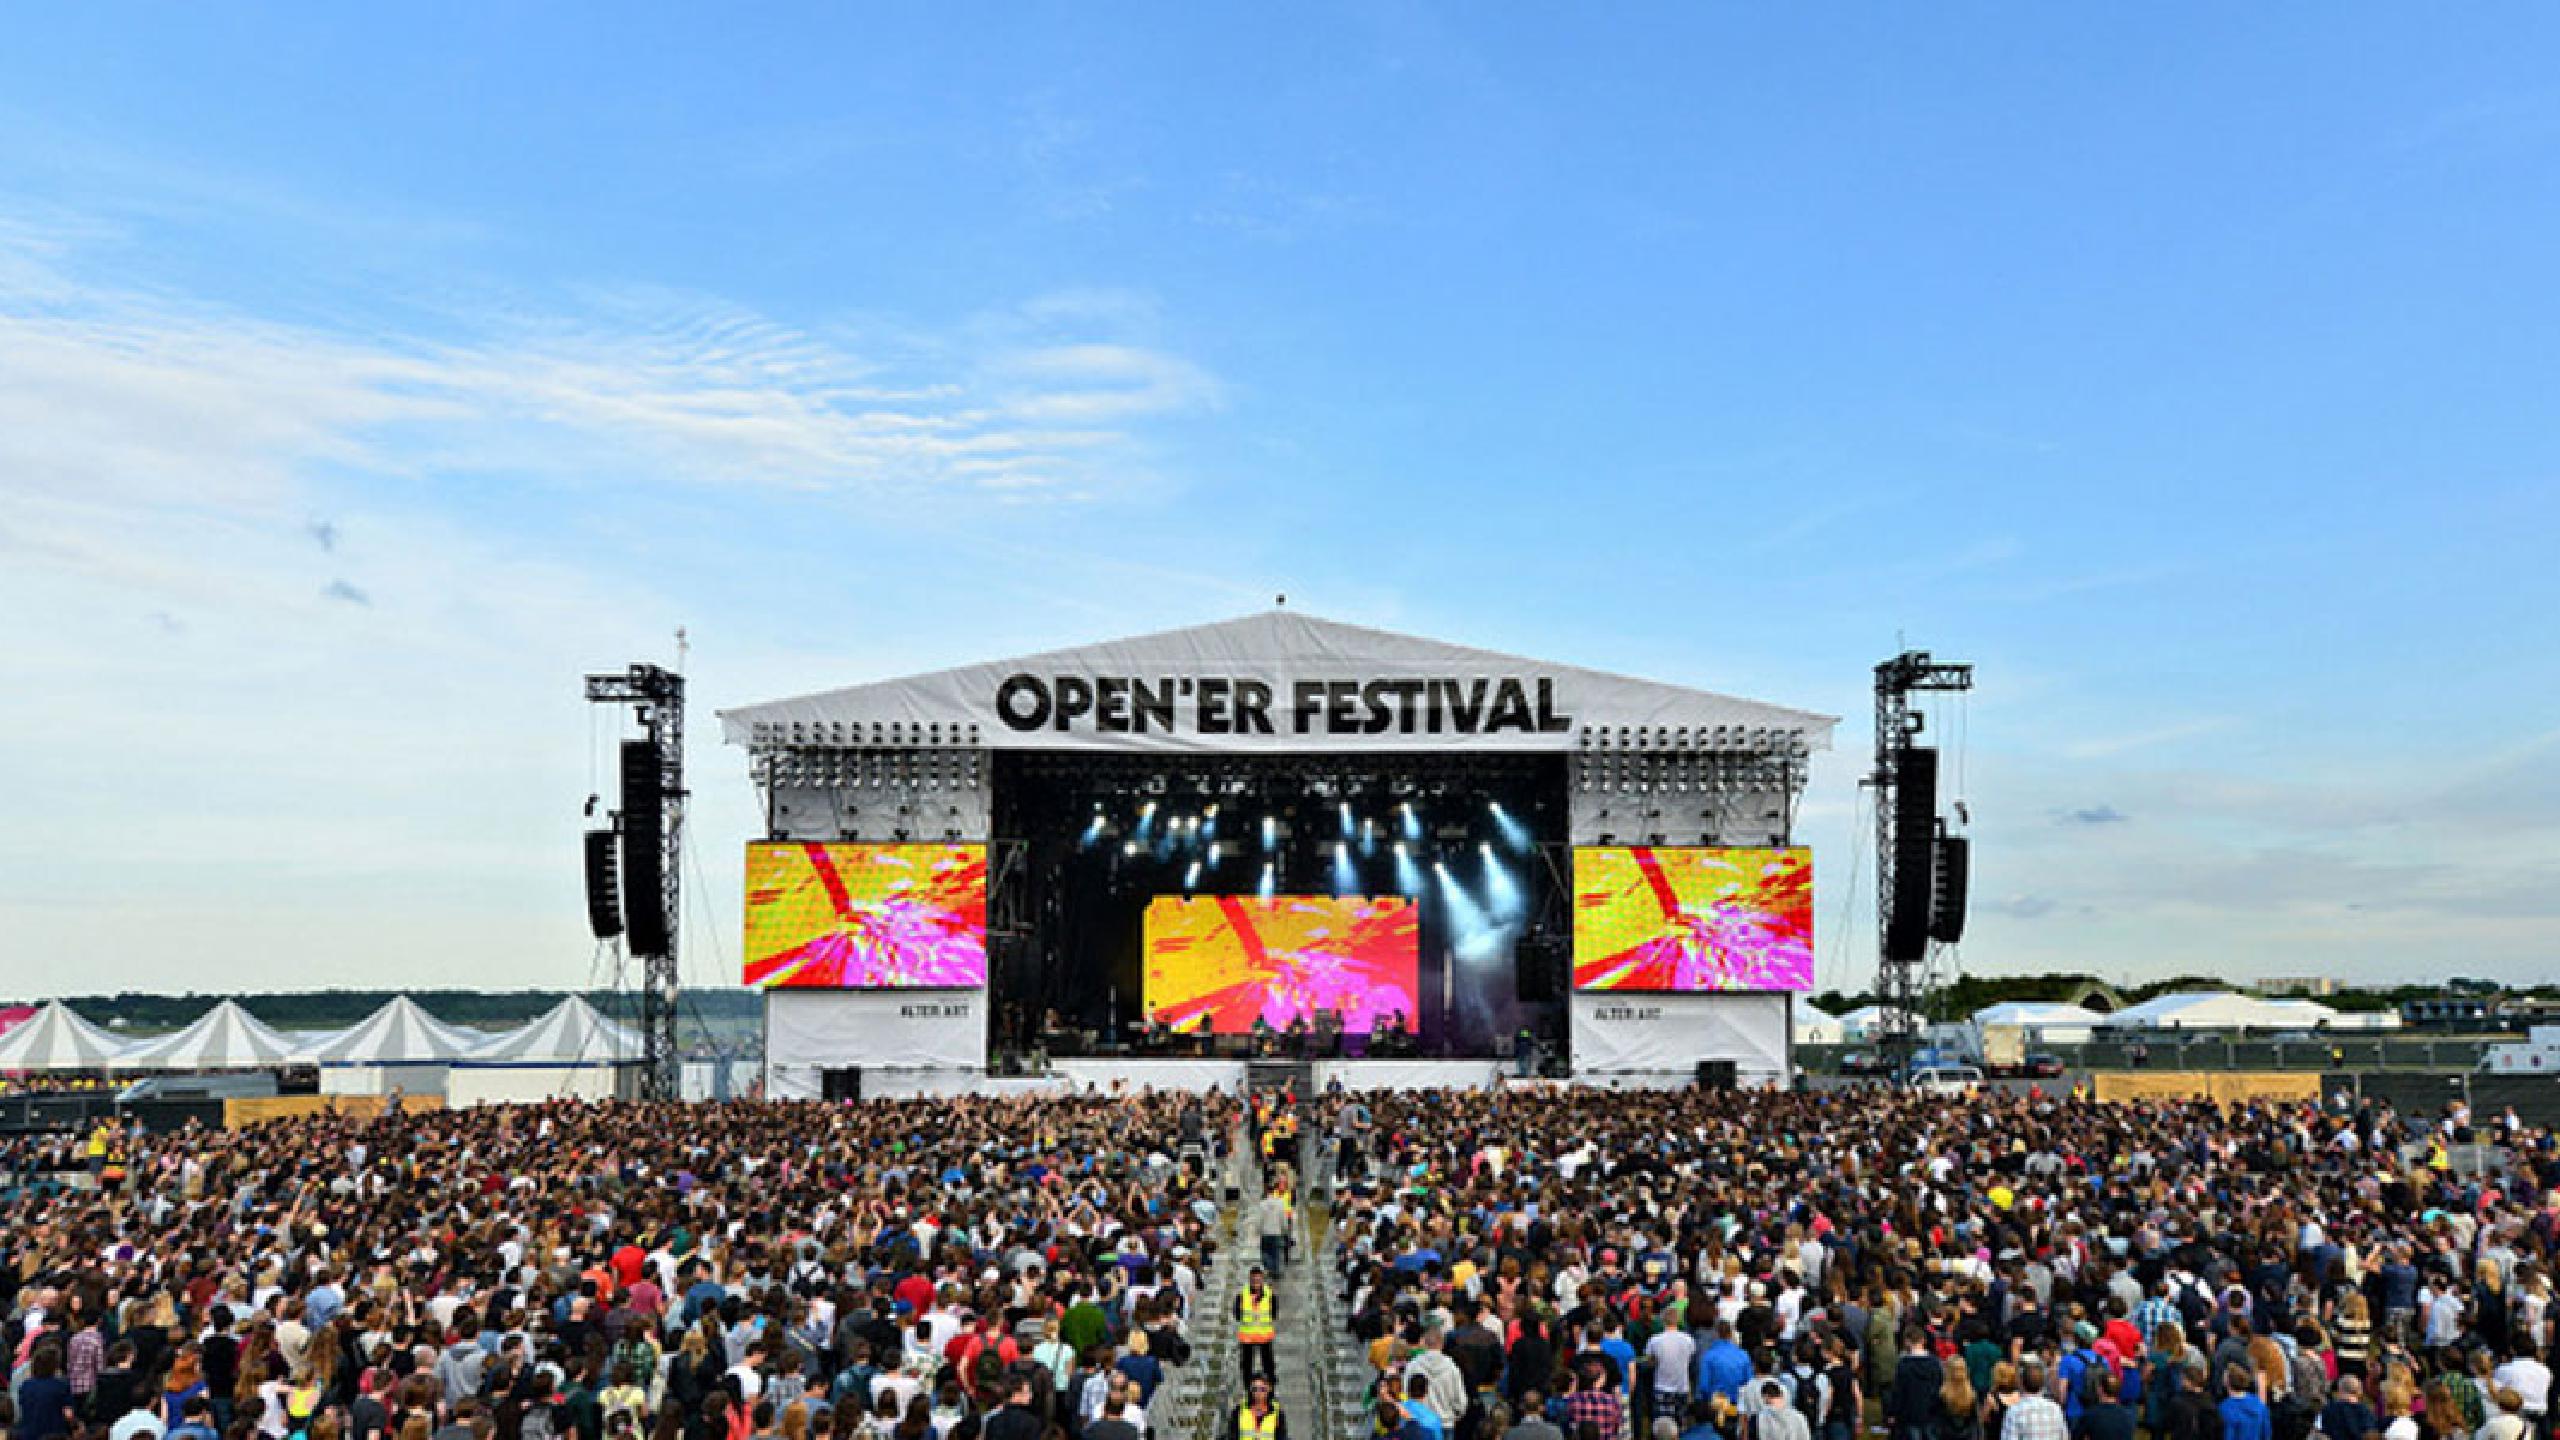 Open'er Festival 2020. Tickets, lineup, bands for Open'er Festival 2020